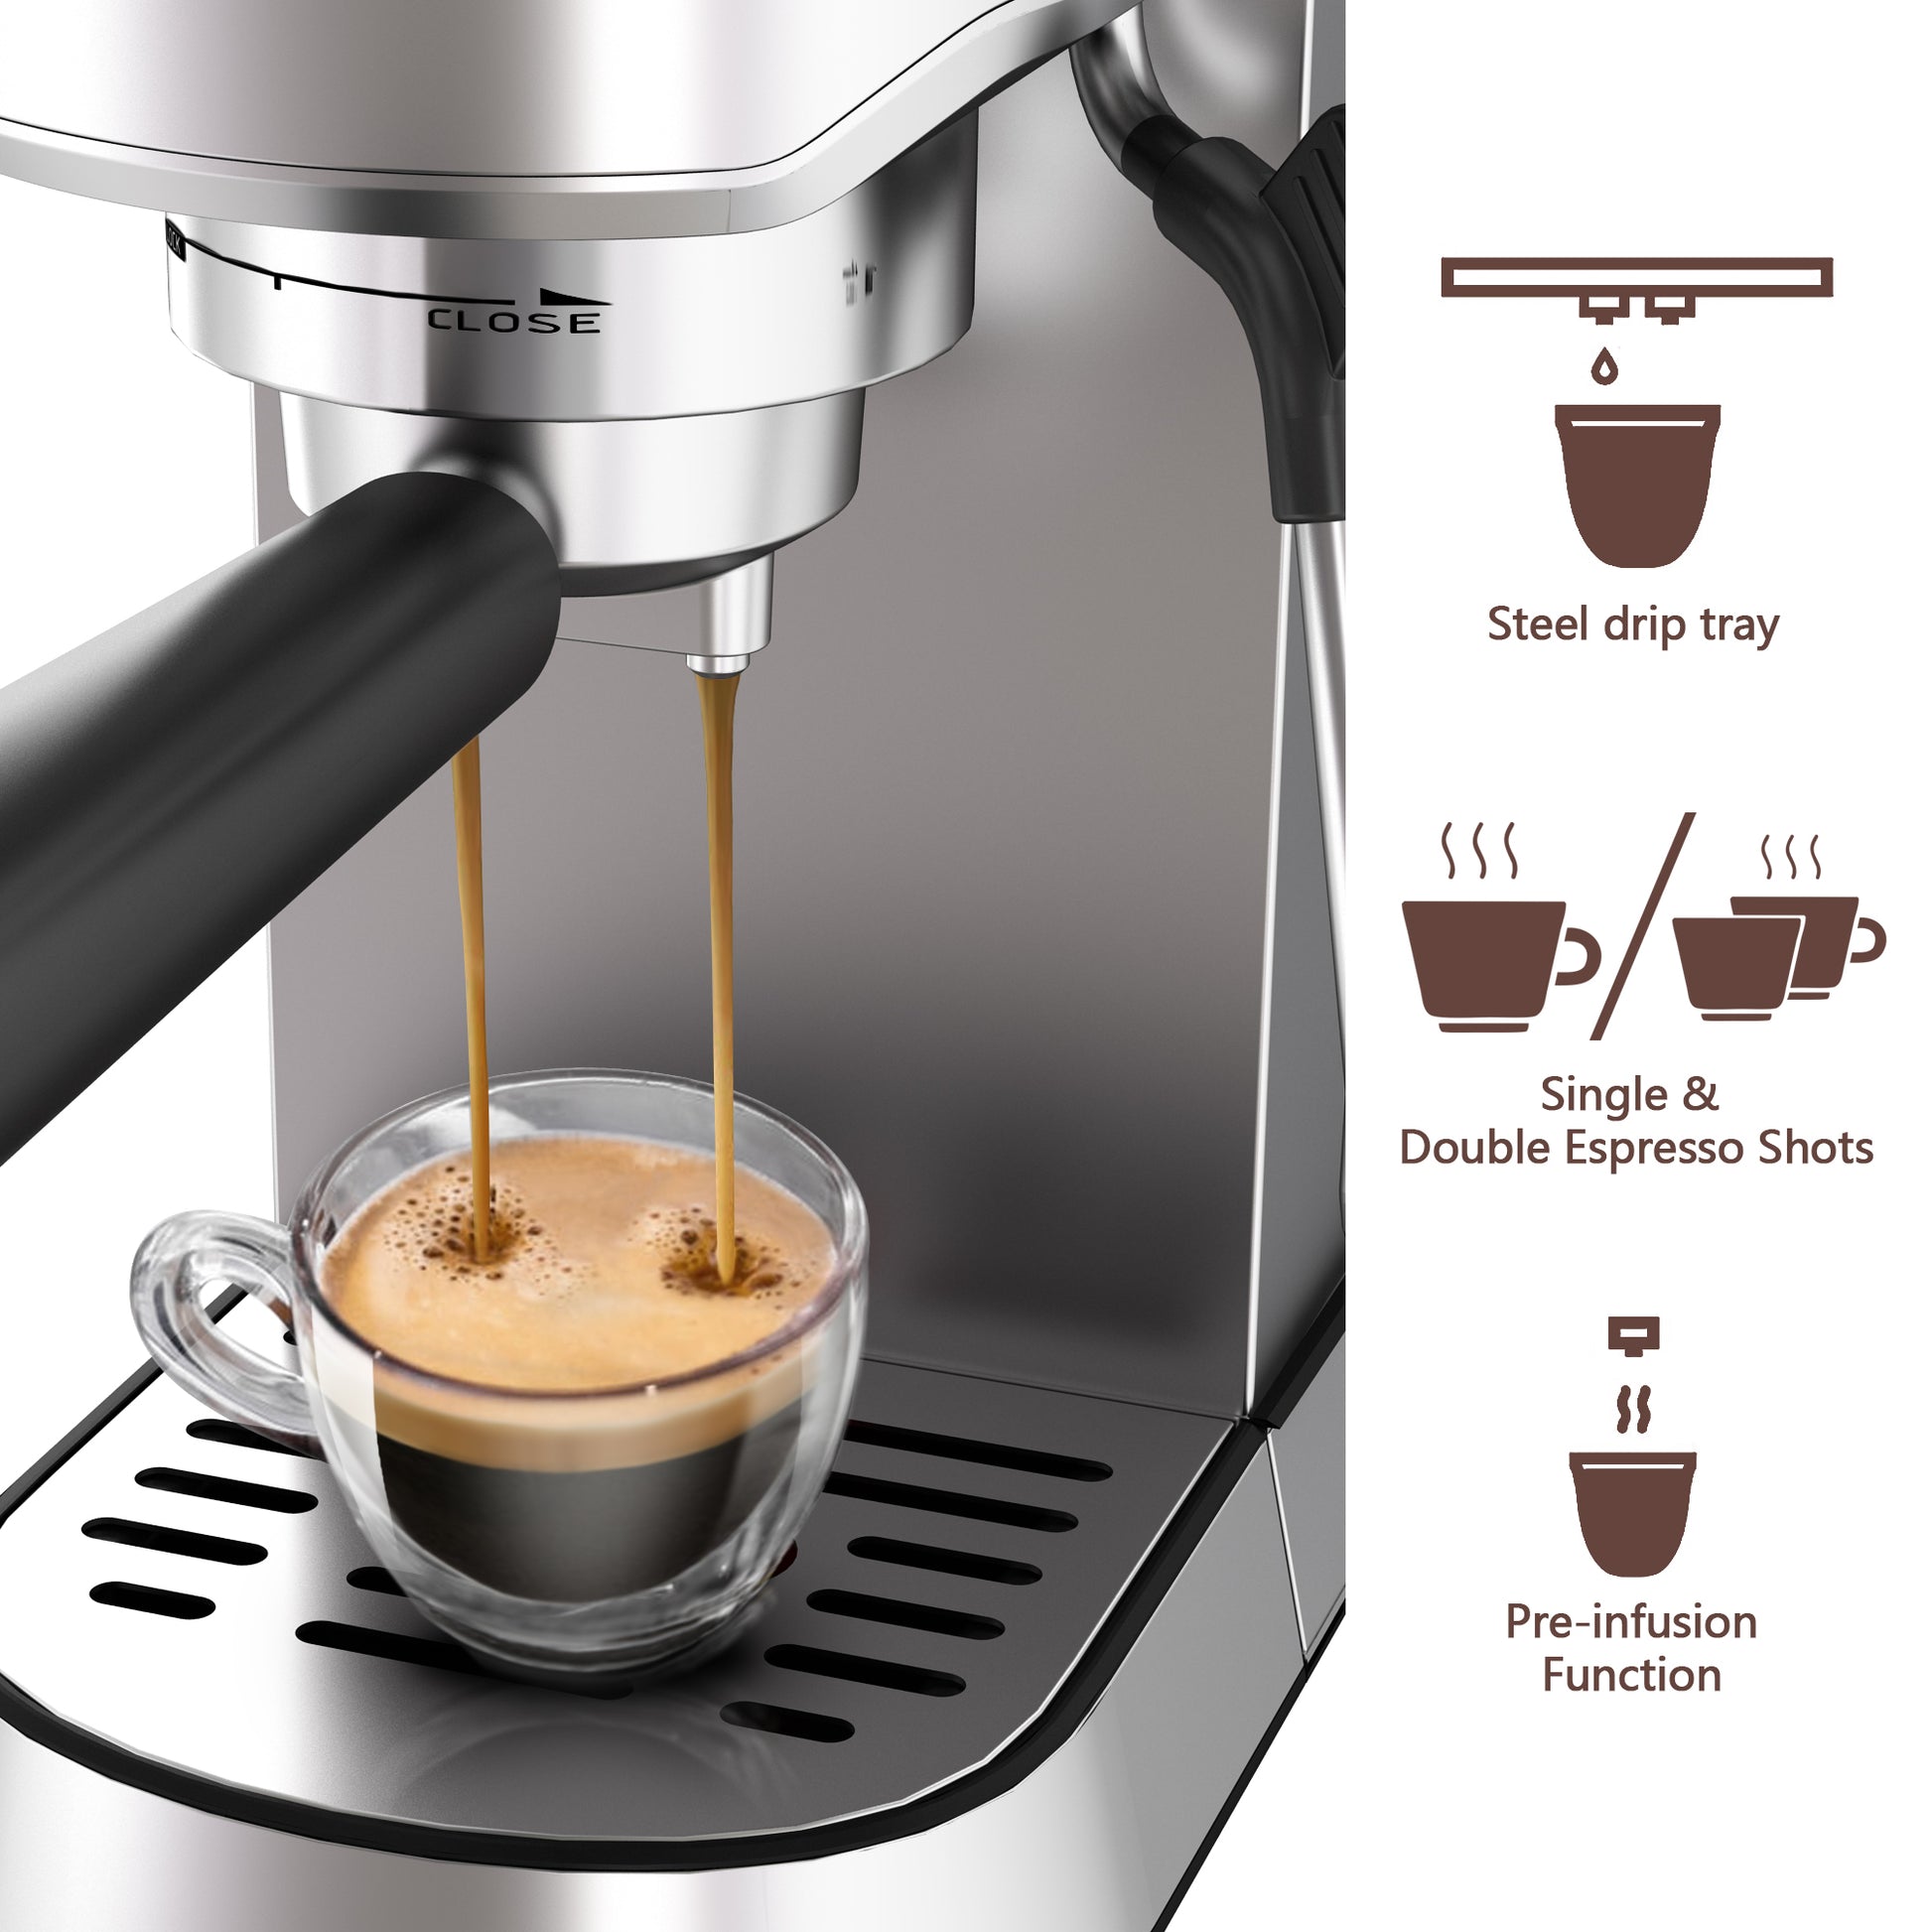 <img src="espresso machine.jpg" alt="wirsh 15 bar espresso machine single double shot"/>